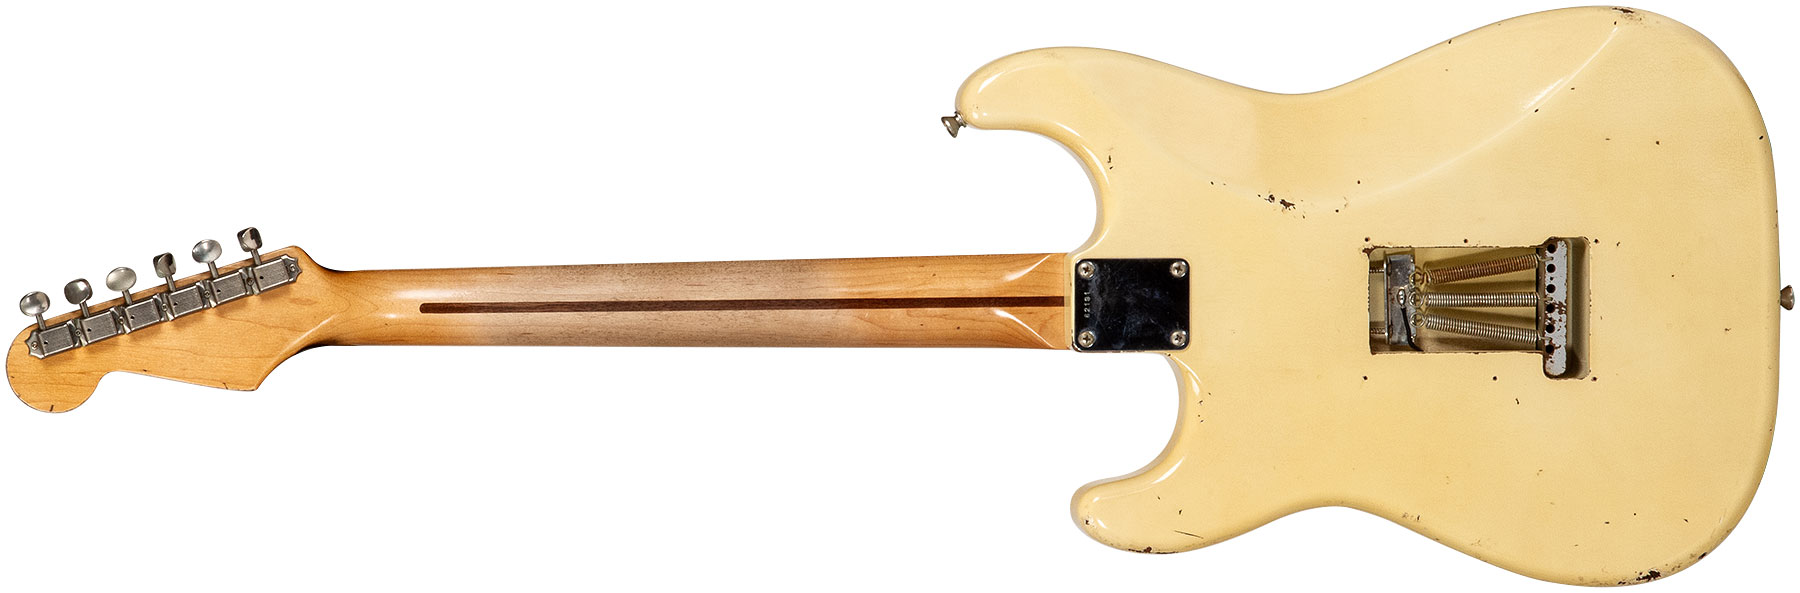 Rebelrelic S-series 55 3s Trem Mn #62191 - Light Aged Banana - E-Gitarre in Str-Form - Variation 1